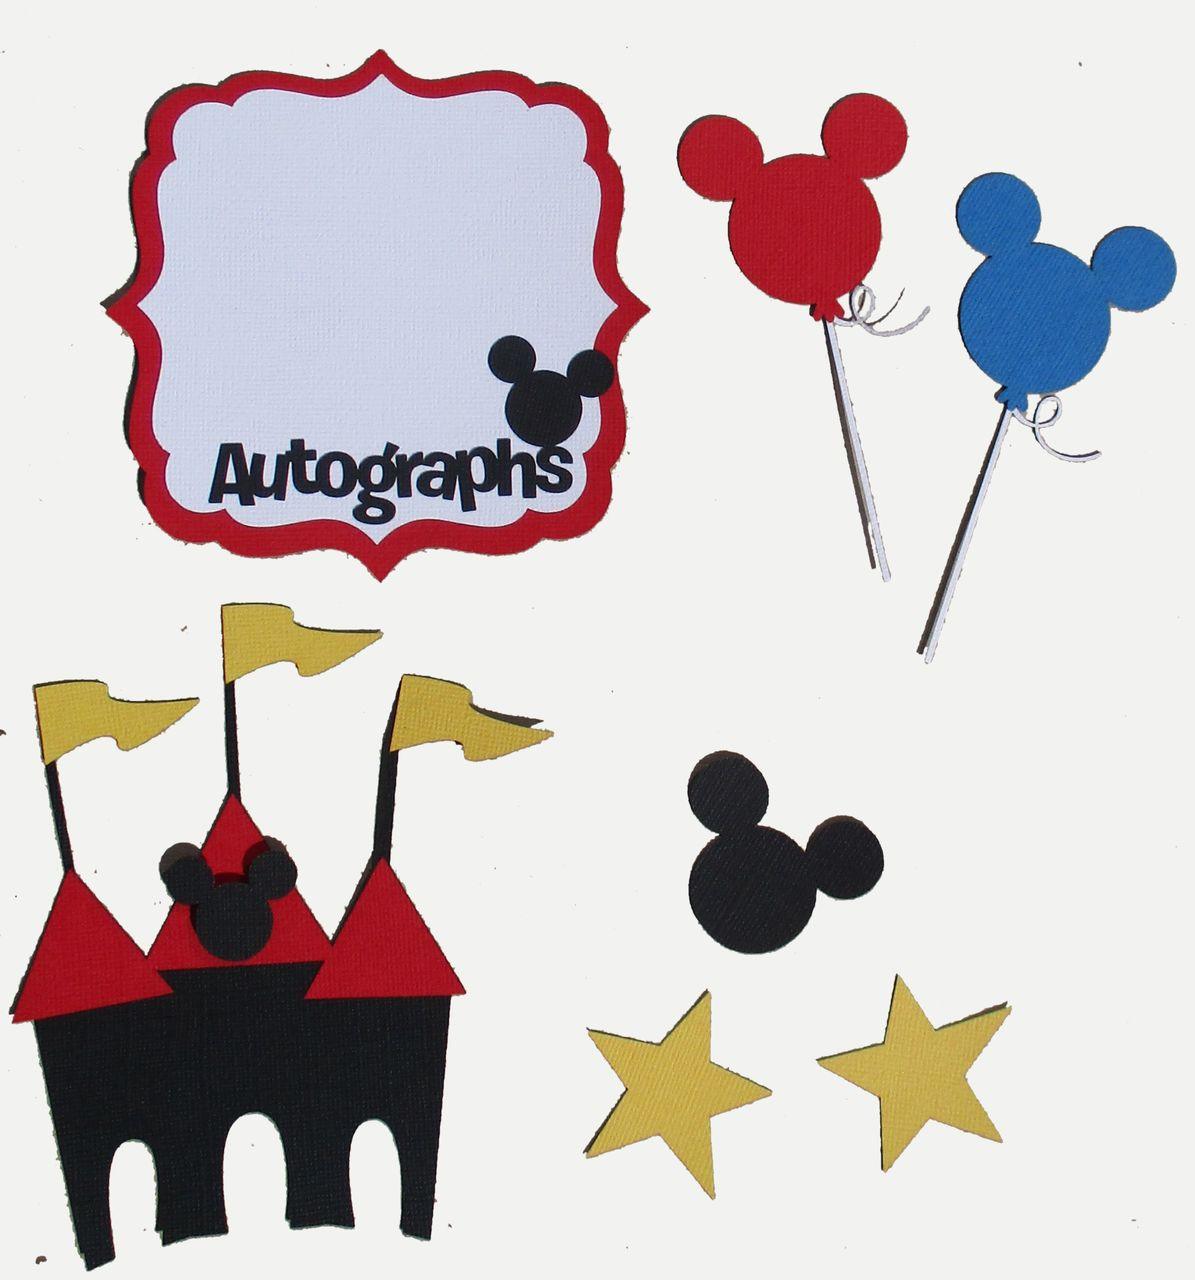 Disneyana Autographs & Accessories Fully-Assembled Laser Cut Scrapbook Embellishment by SSC Laser Designs